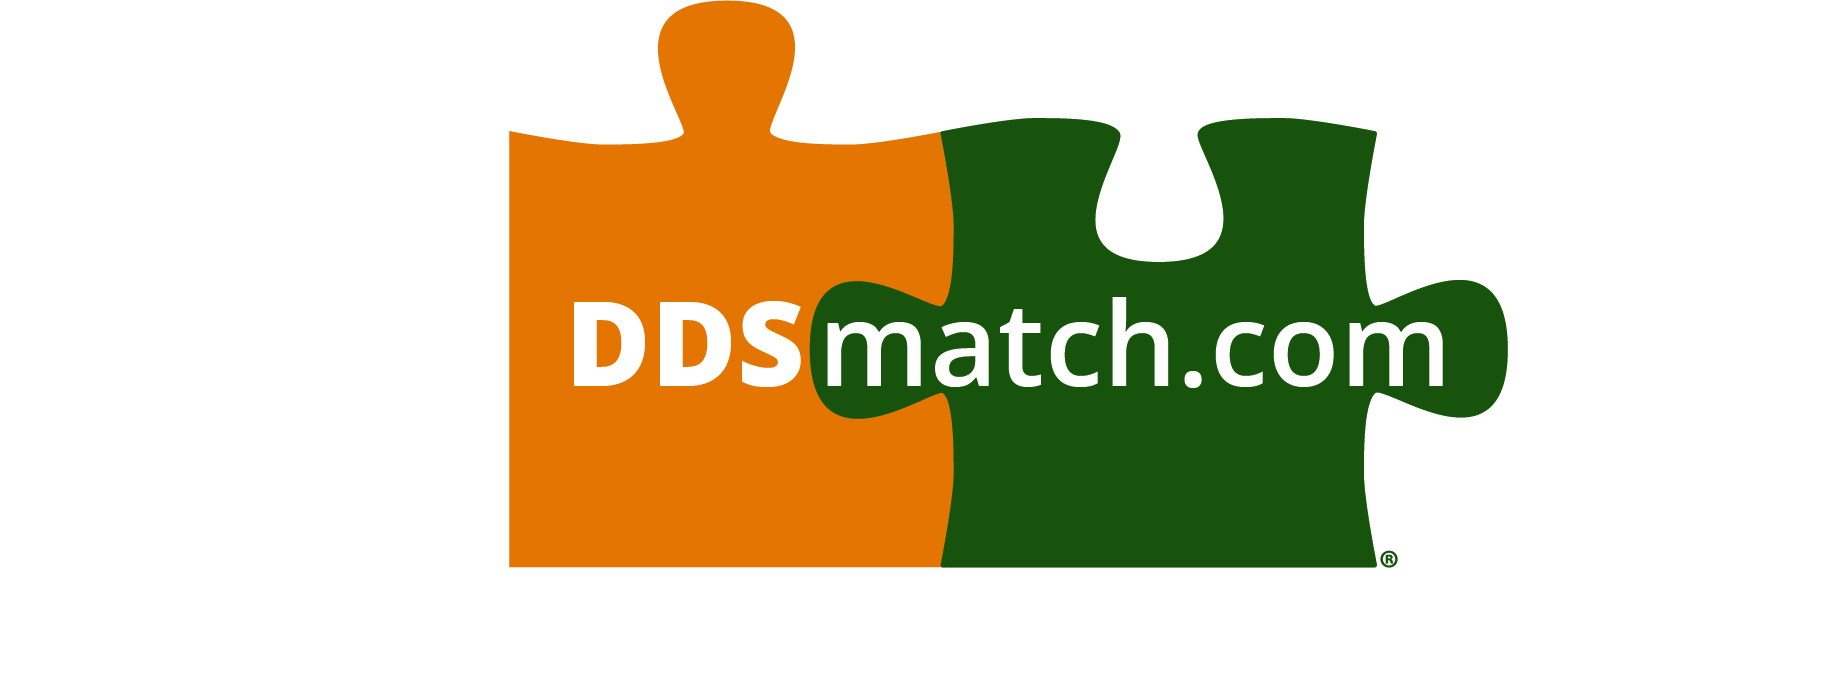 ddsmatch.com - John Kuriger Logo